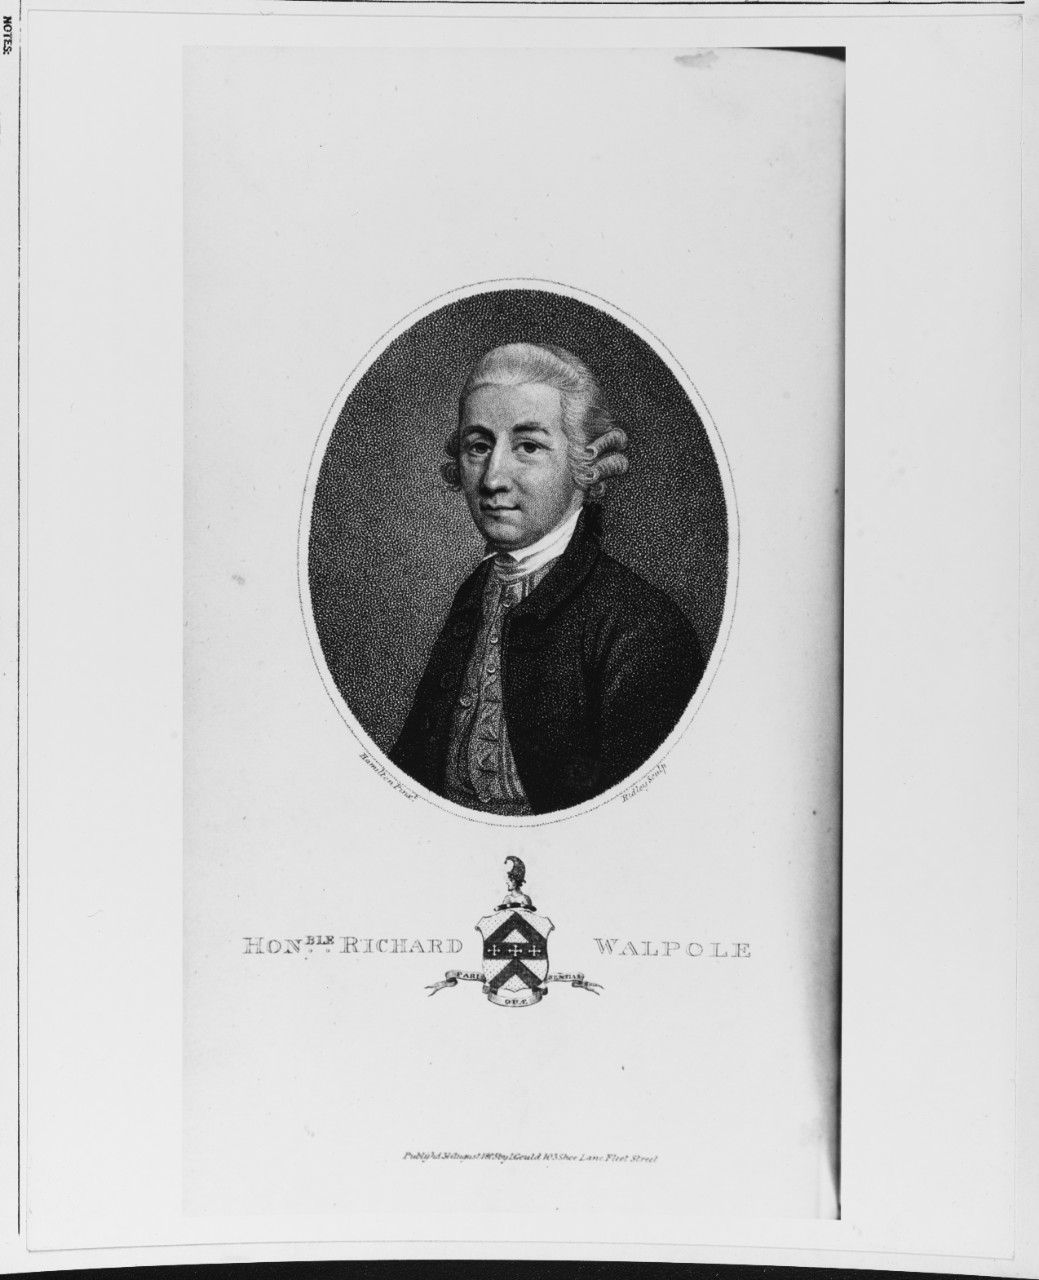 Richard Walpole (1729 - 1798), Captain of the East India Company